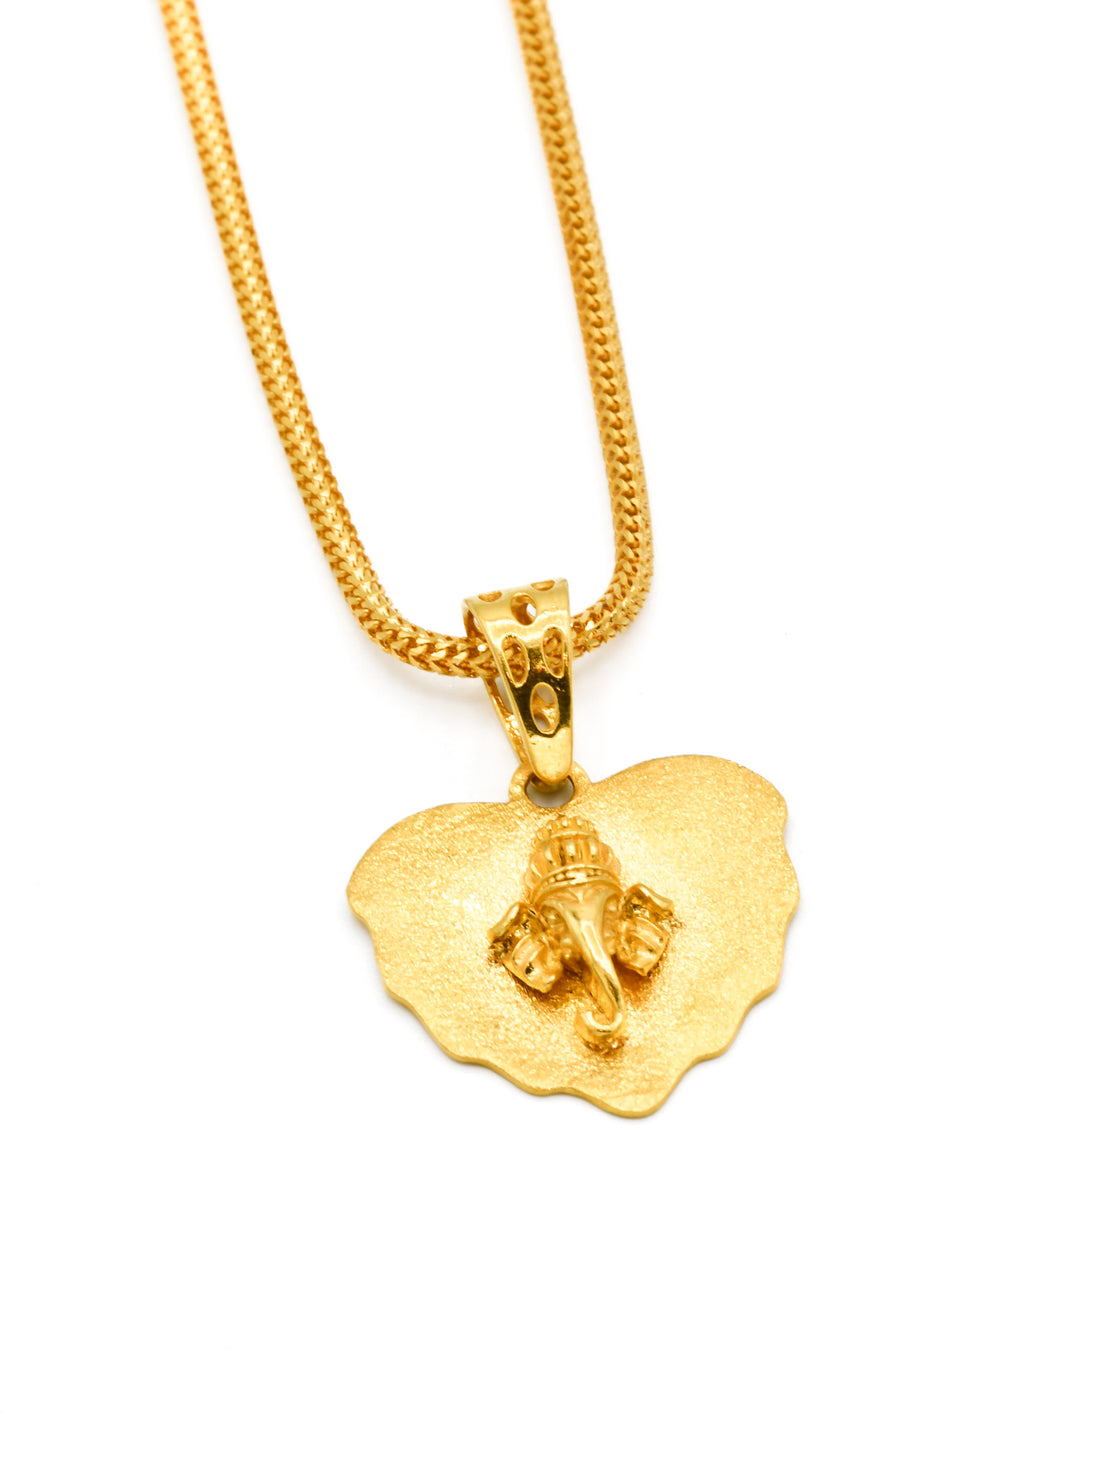 22ct Gold Leaf Ganesha Pendant - Roop Darshan